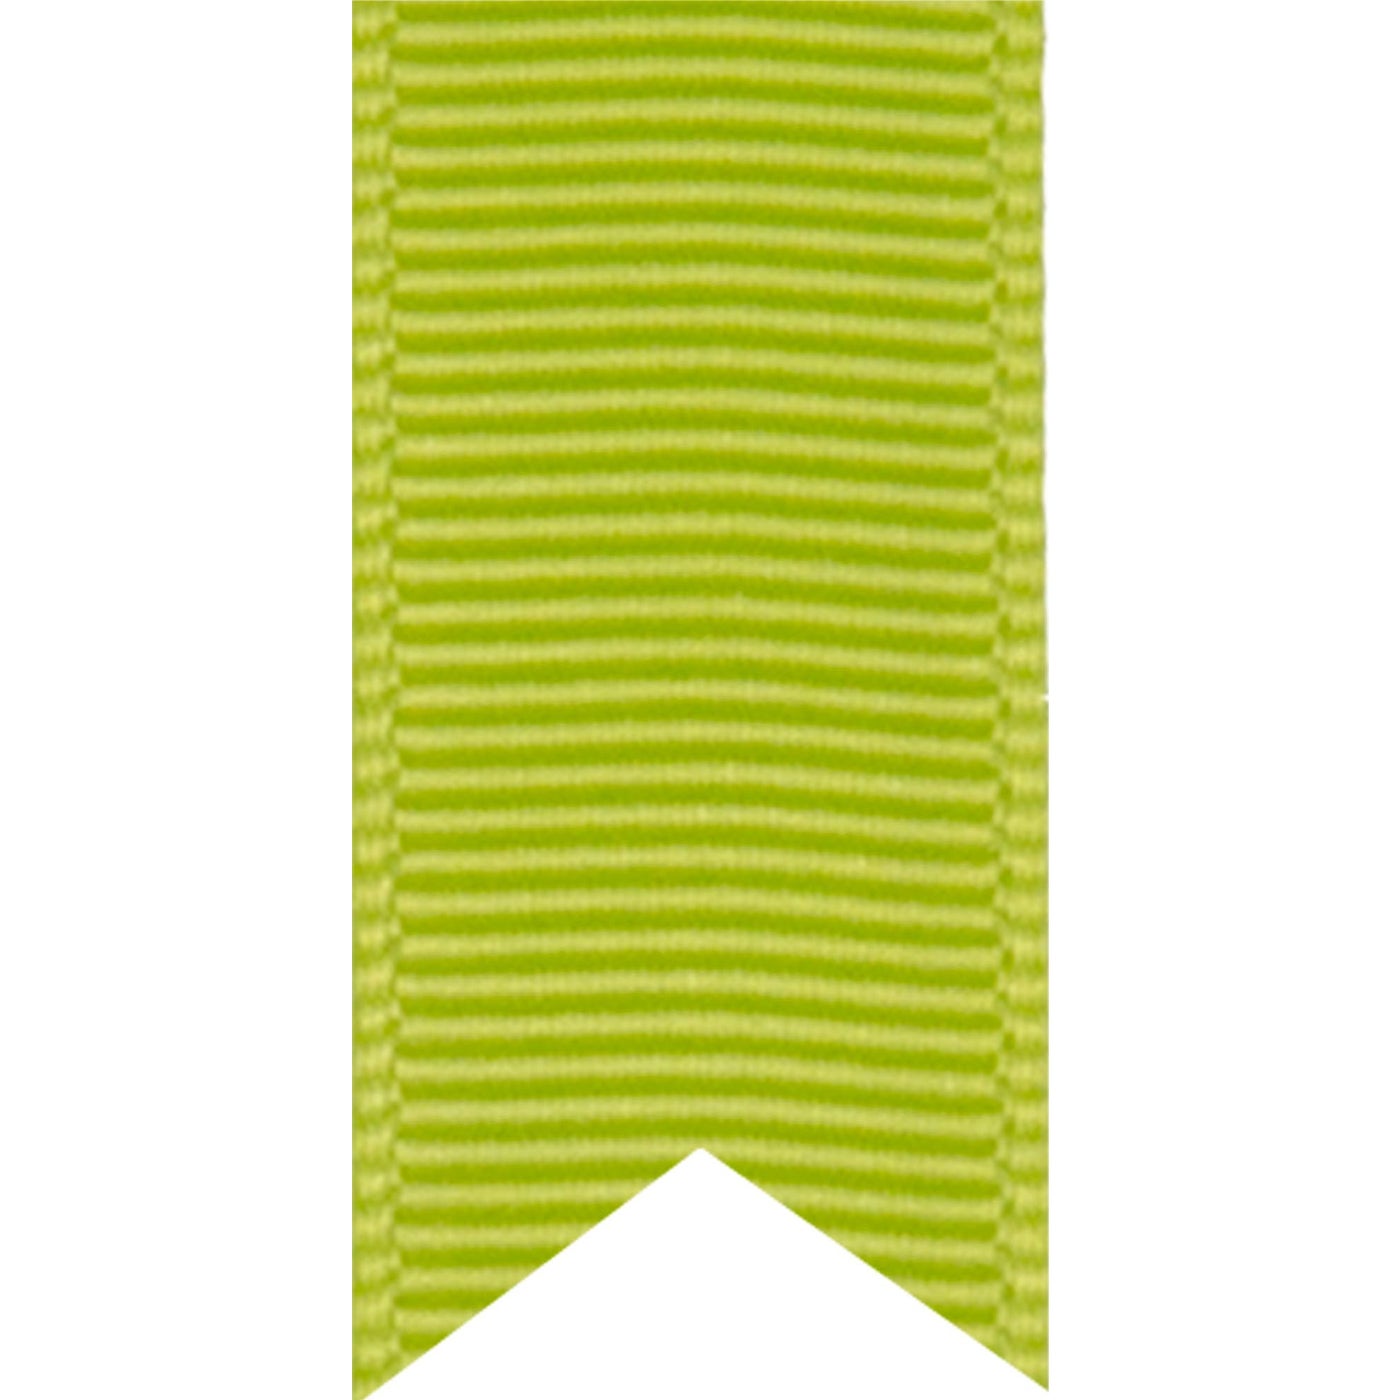 5/8" Apple Green Grosgrain Ribbon